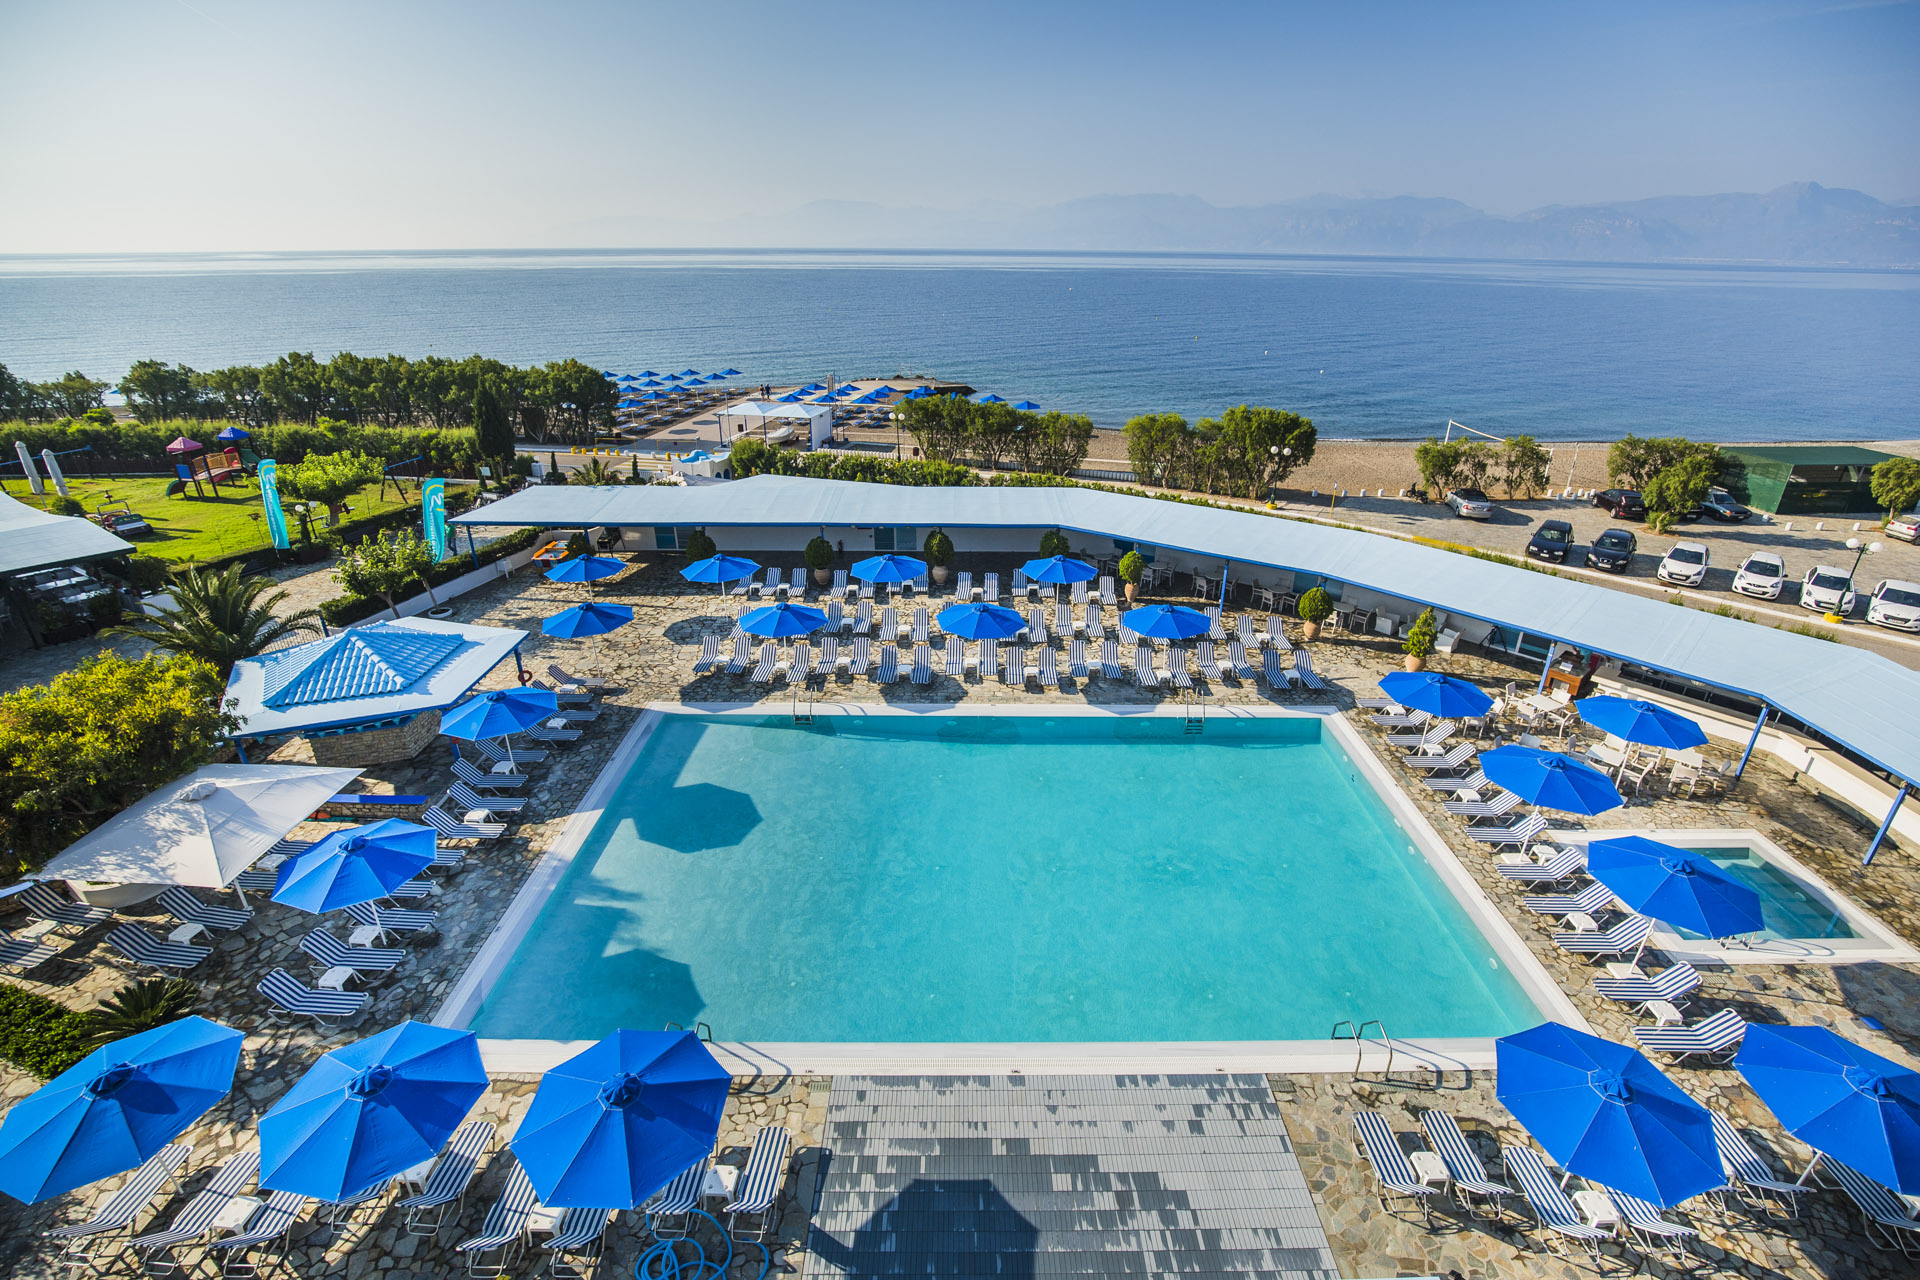 4* Delphi Beach Hotel - Ερατεινή Φωκίδας ✦ -30% ✦ 3 Ημέρες (2 Διανυκτερεύσεις) ✦ 2 άτομα + 2 παιδιά 1 έως 12 ετών και 1 έως 2 ετών ✦ 12 ✦ Αγίου Πνεύματος (02/06/2023 έως 05/06/2023) ✦ Παιδότοπος